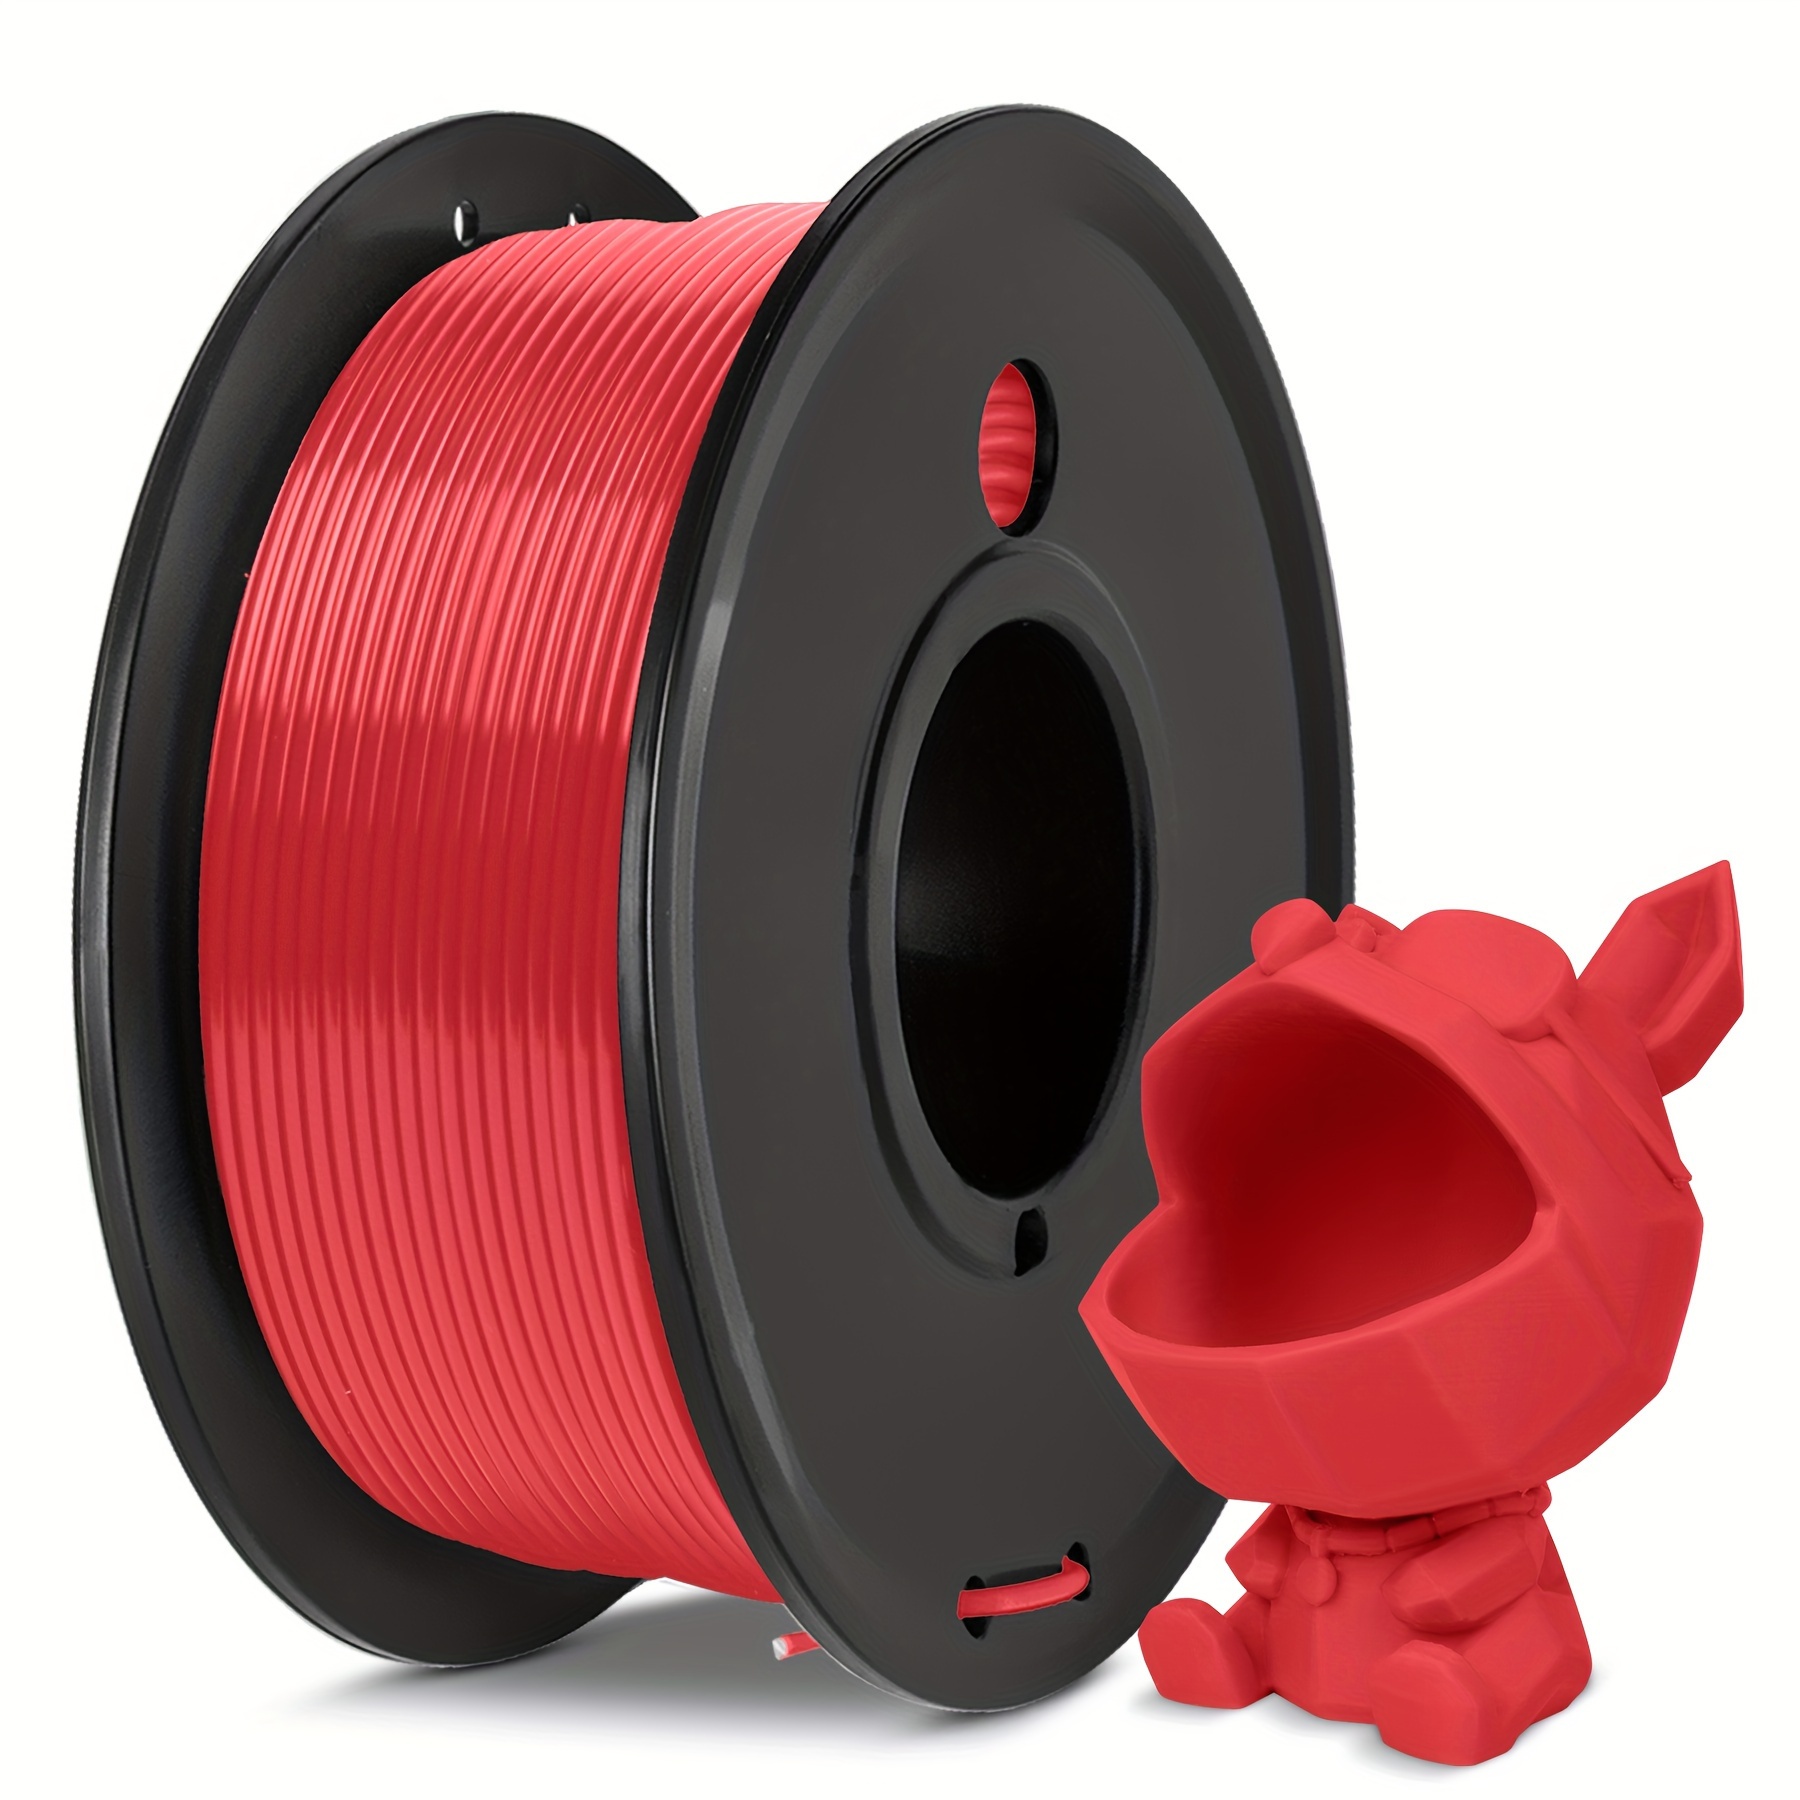 SUNLU 3D Printer Filament PLA/Matte/Meta PLA+ ABS PETG SILK 1KG 500g-TPU  1.75mm